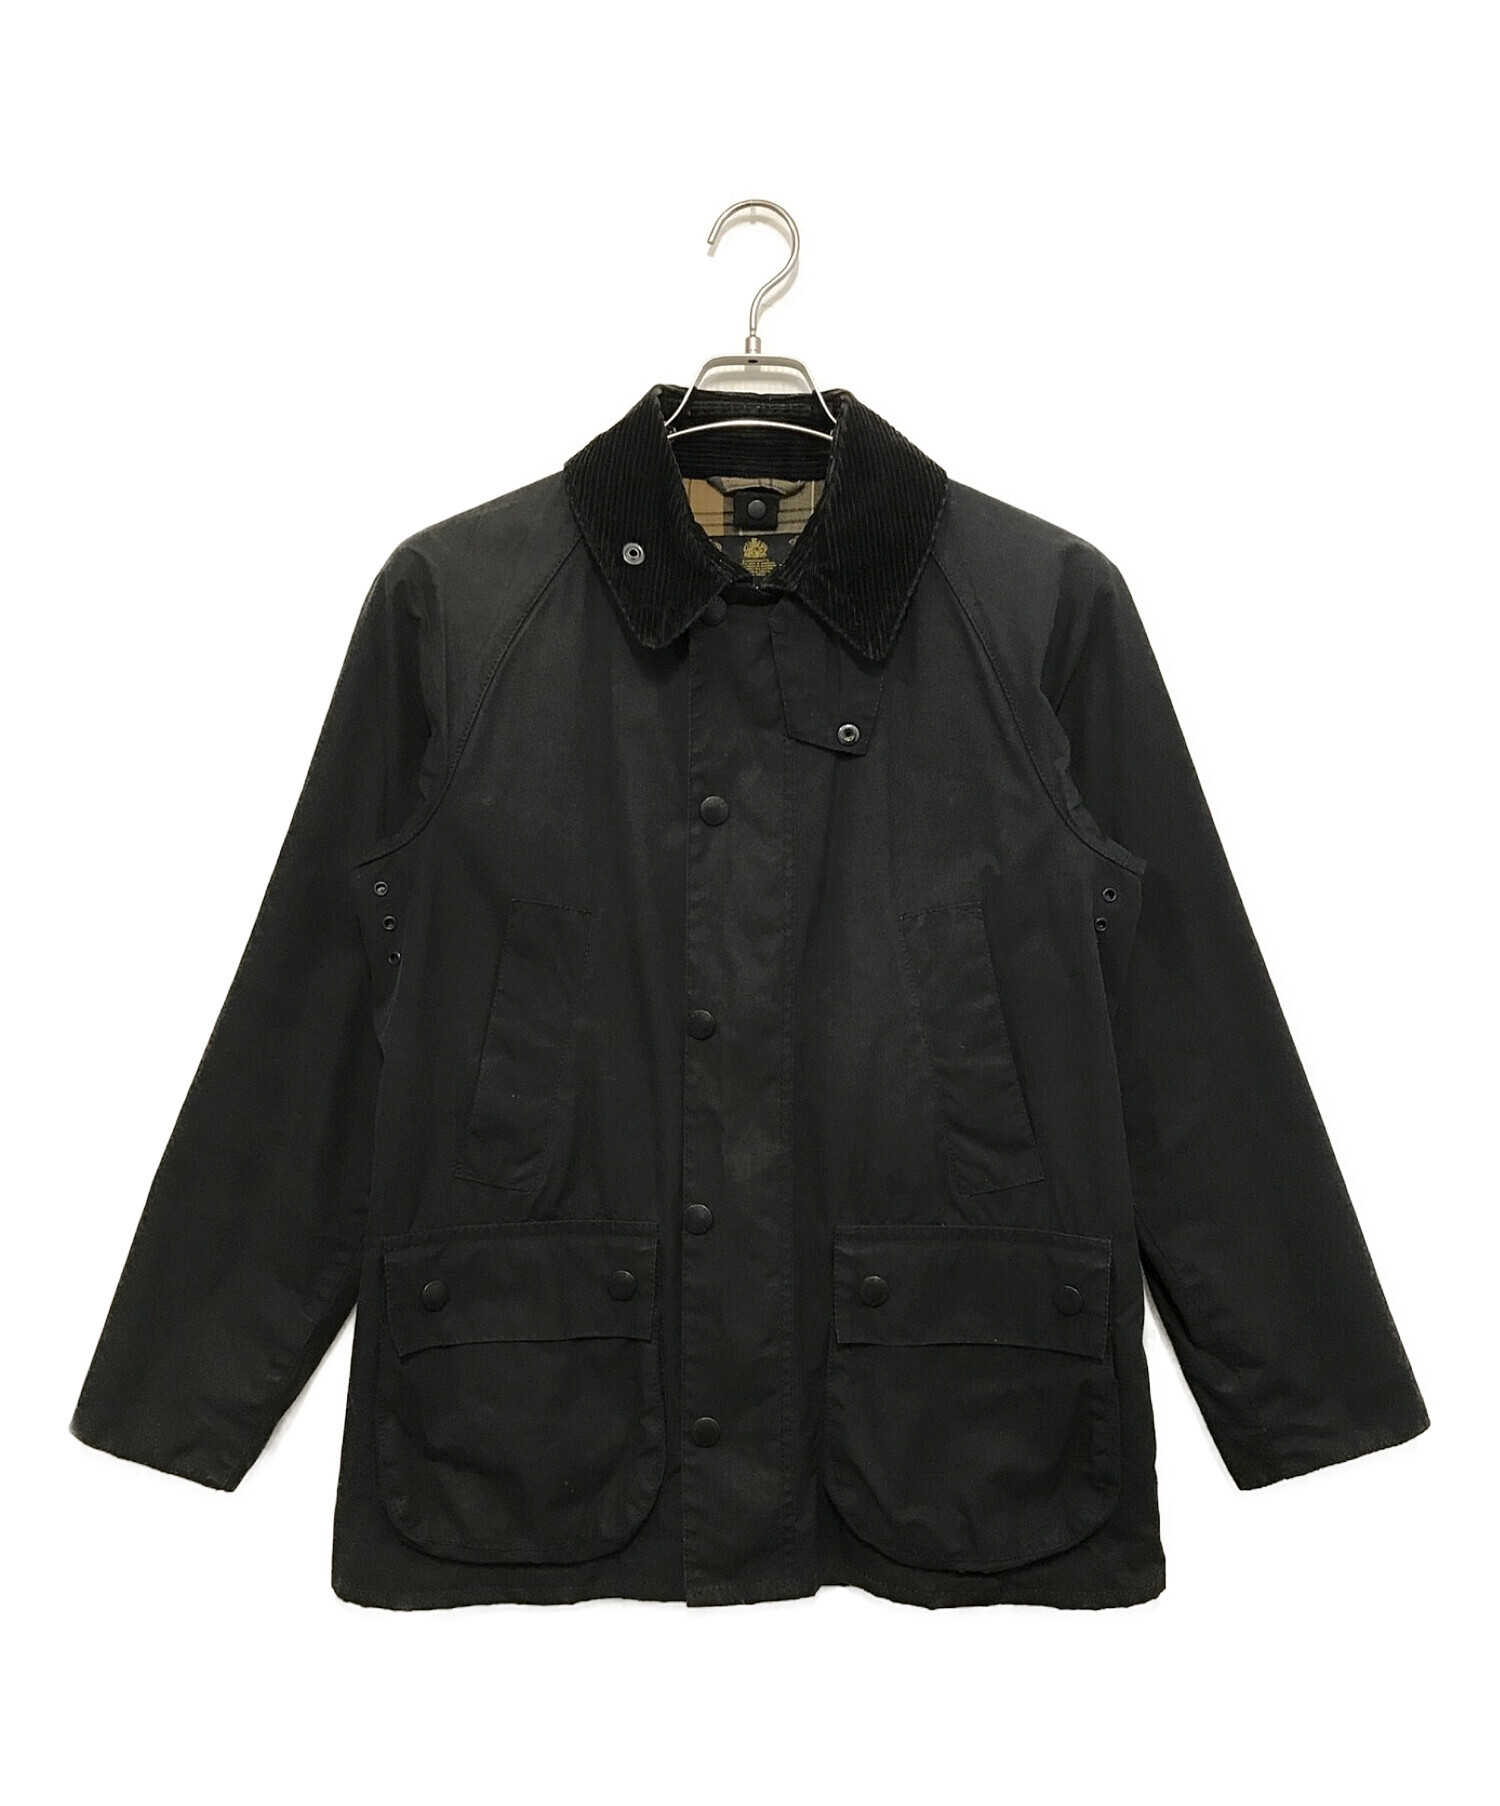 BARBOUR SL BEDALE jacket ビデイル ジャケット 黒 38素人採寸ですのでご了承ください